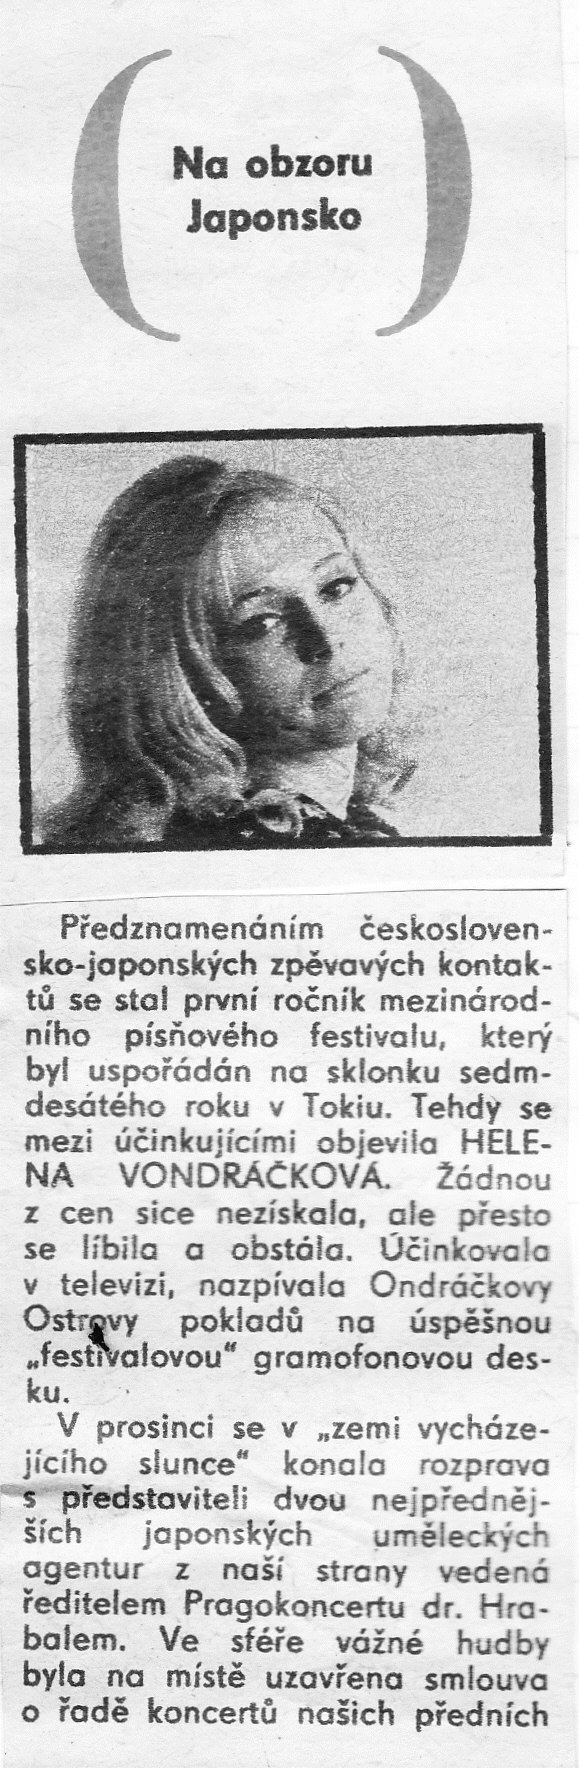 1972, Mladý svět-únor, 1.část.jpg